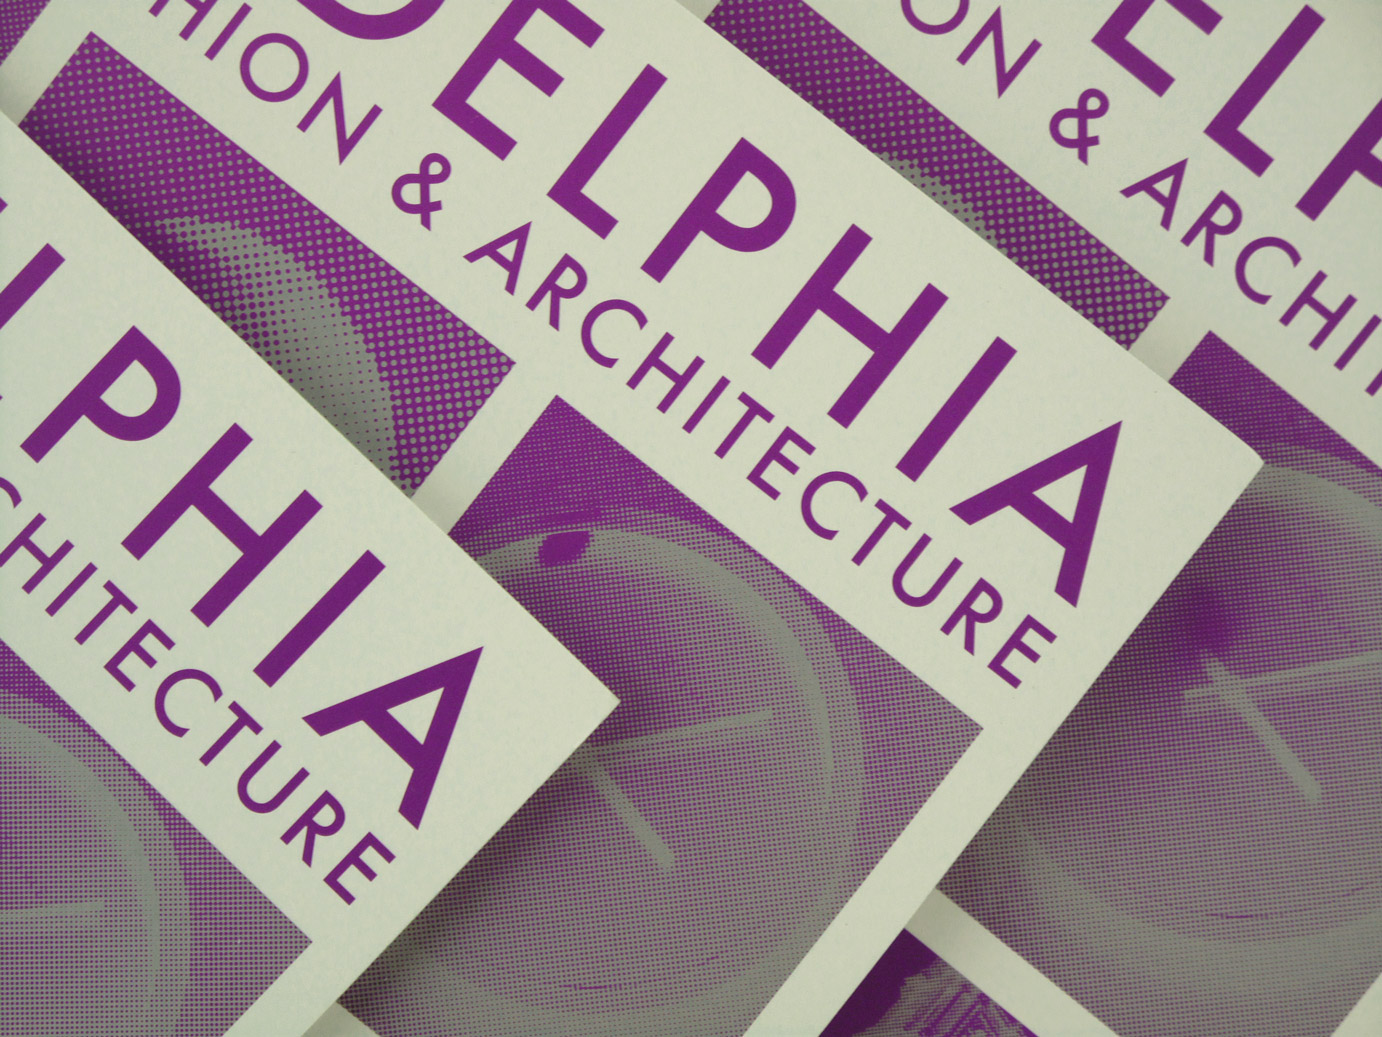 Philadelphia Design Fashion Architecture Presskit detail